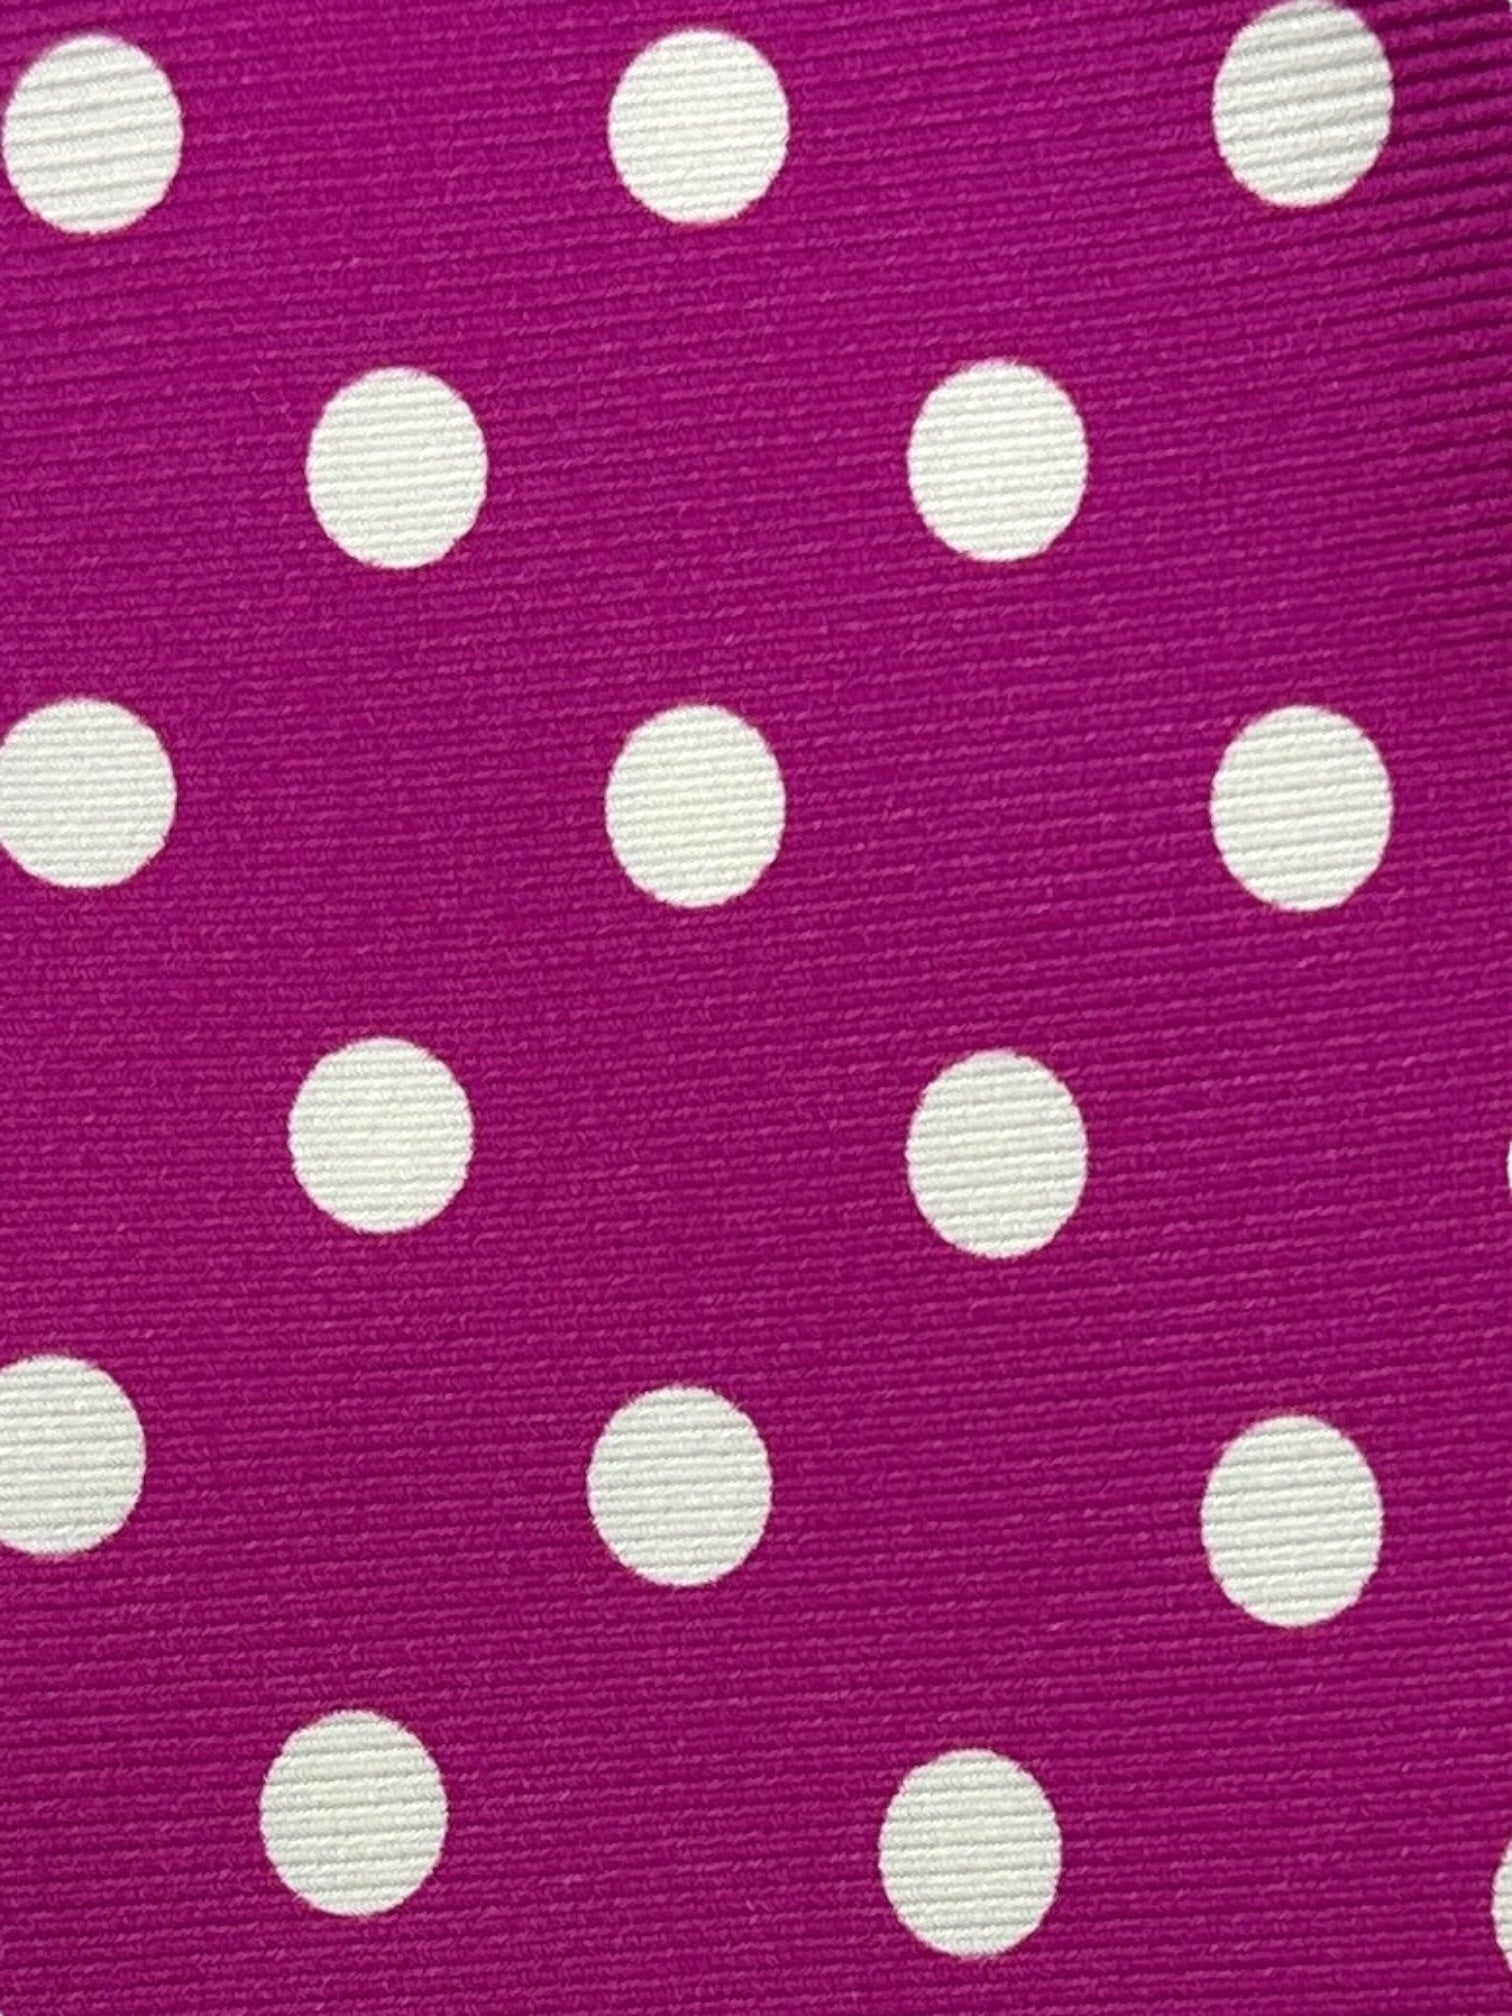 Kiton 7-Fold Pink Polka Dot Tie